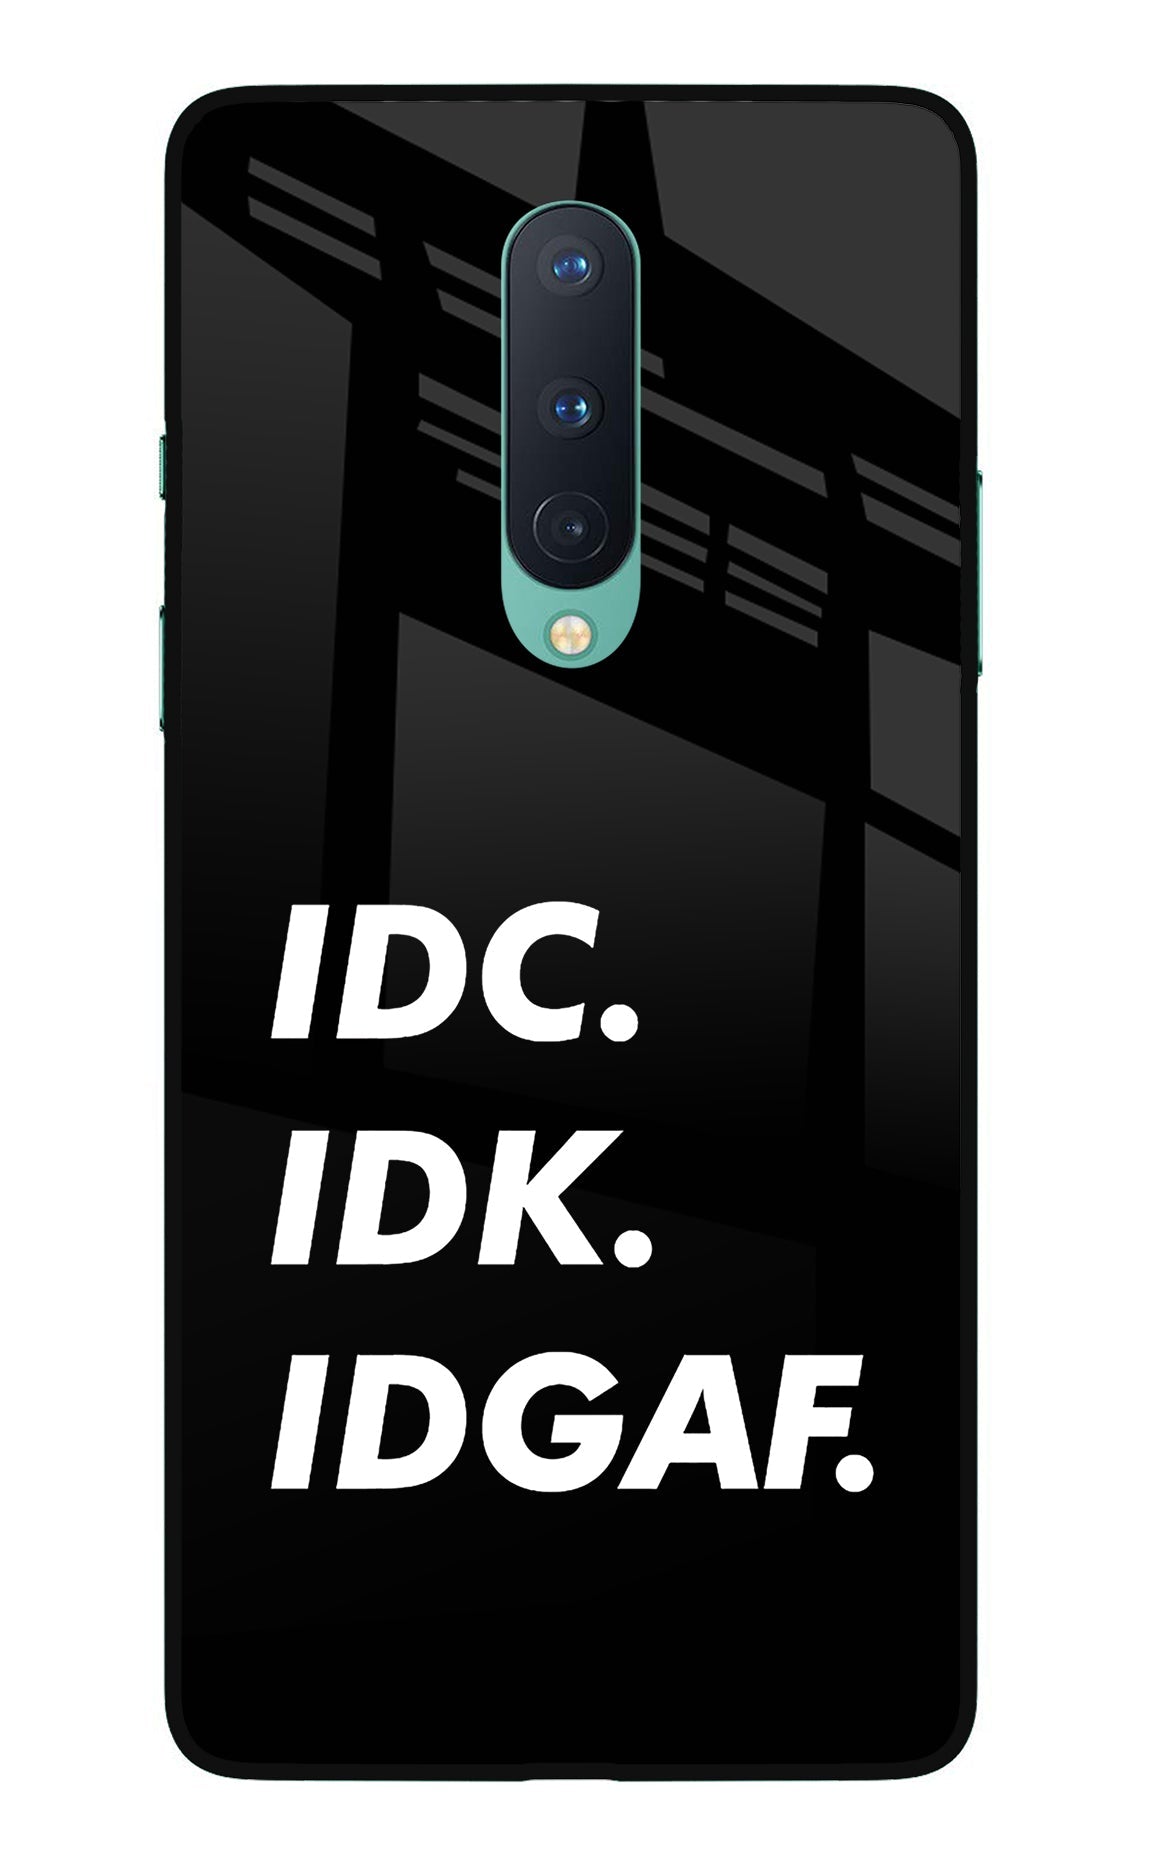 Idc Idk Idgaf Oneplus 8 Glass Case